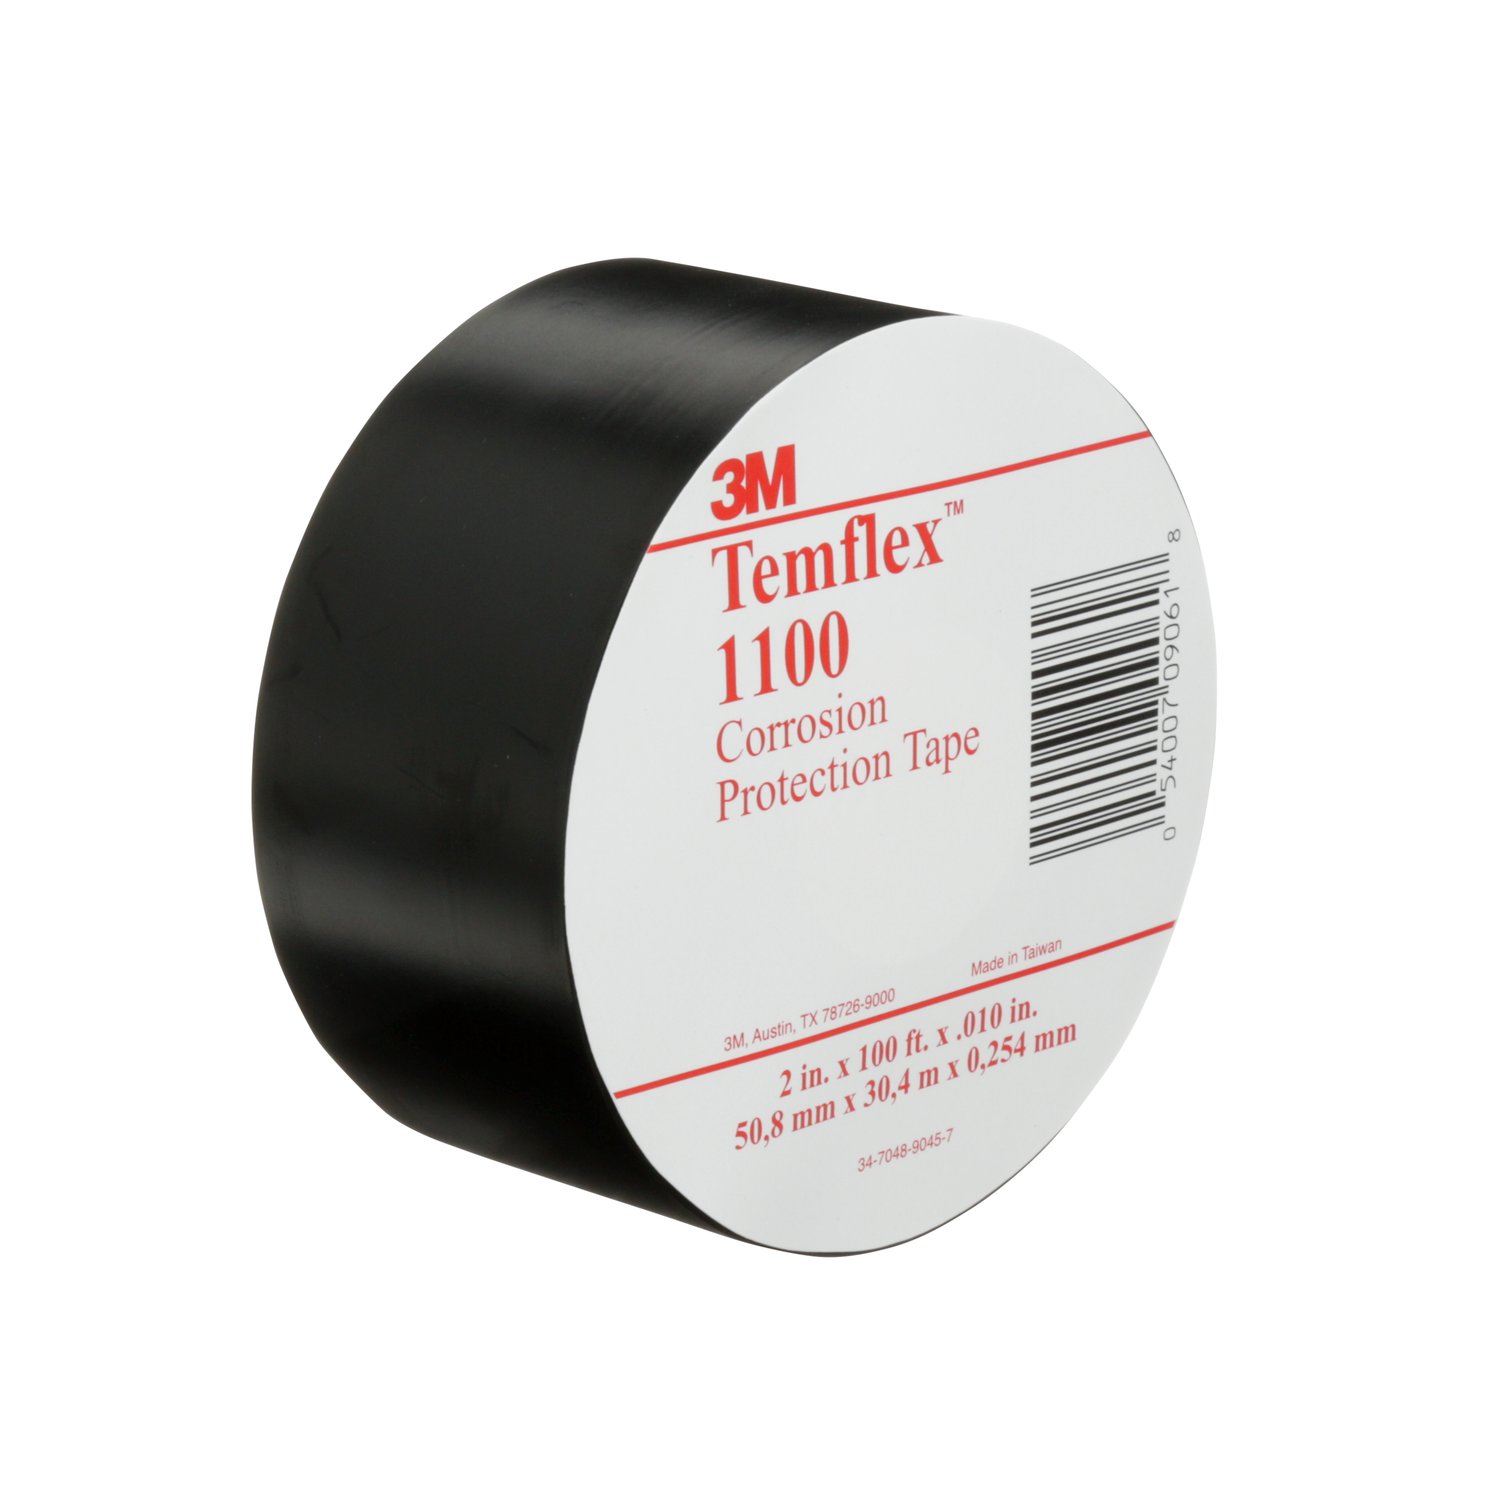 7000005813 - 3M Temflex Vinyl Corrosion Protection Tape 1100, 2 in x 100 ft,
Unprinted, Black, 24 rolls/Case